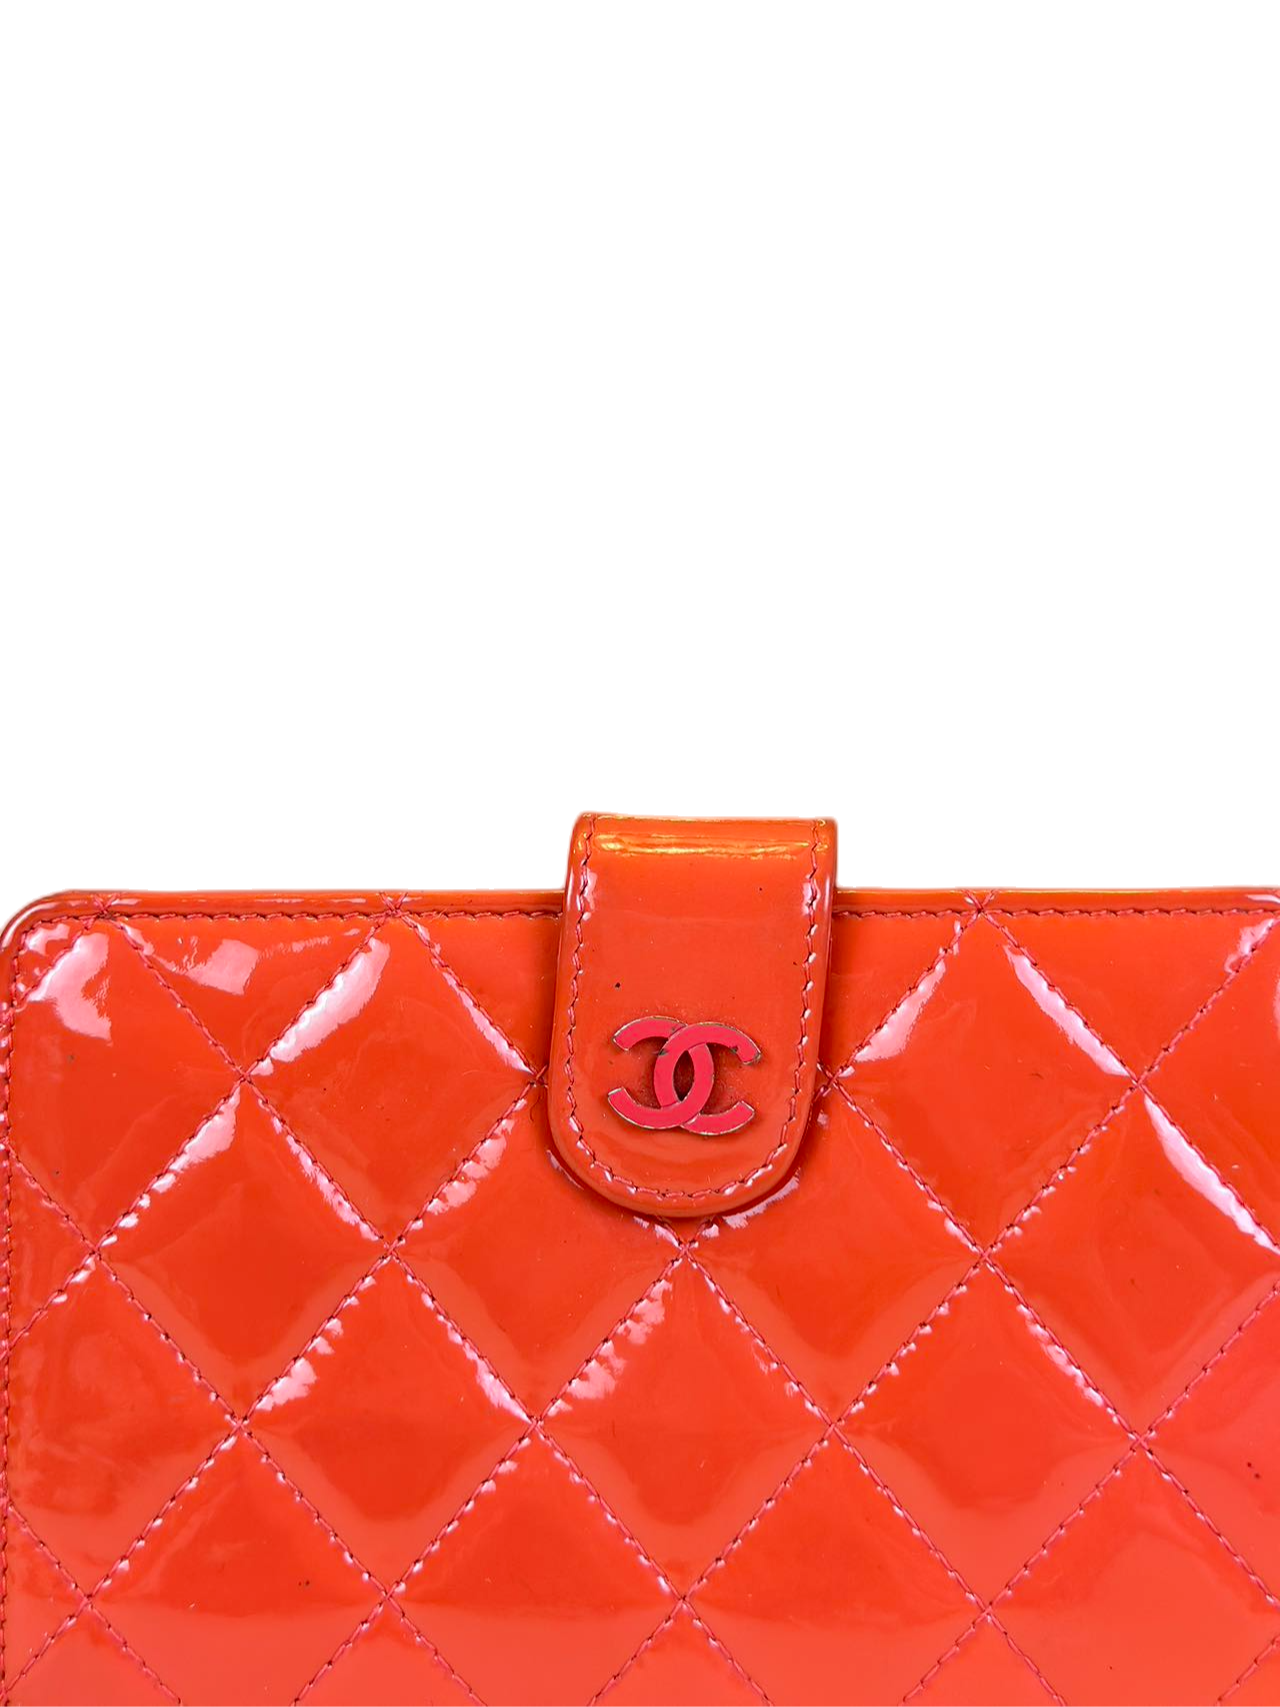 Preloved Chanel Orange Patent Leather Wallet